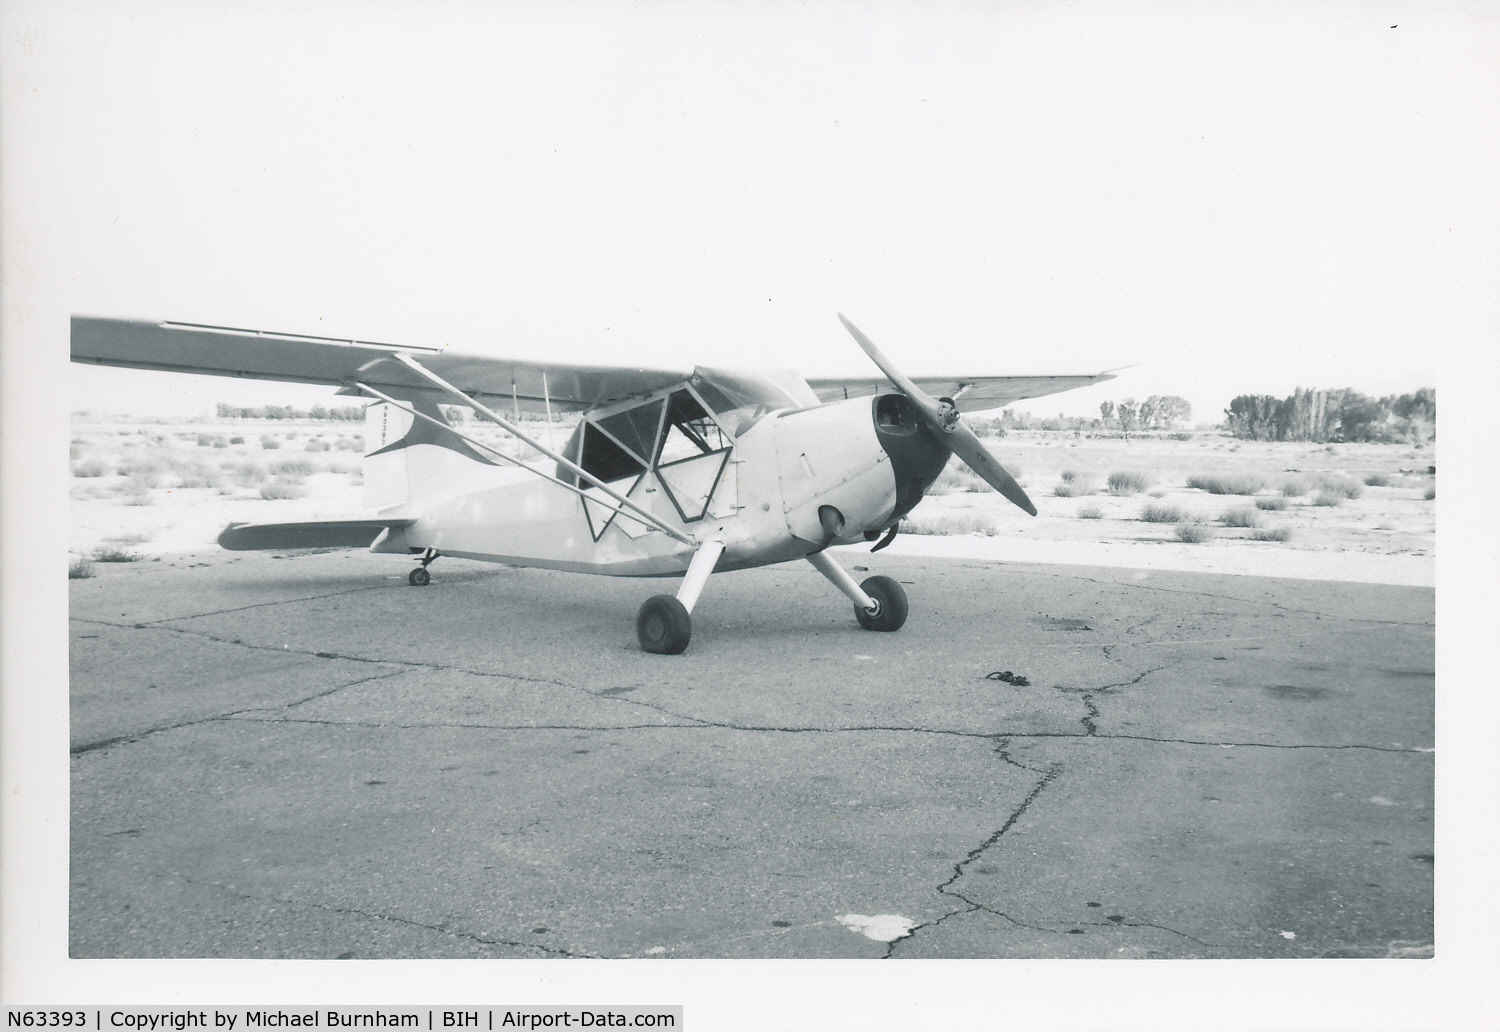 N63393, 1943 Stinson L-5 Sentinel C/N 1909, Photograph of N63393 in 1961 at Bishop, CA airport, 6 more photos avialble